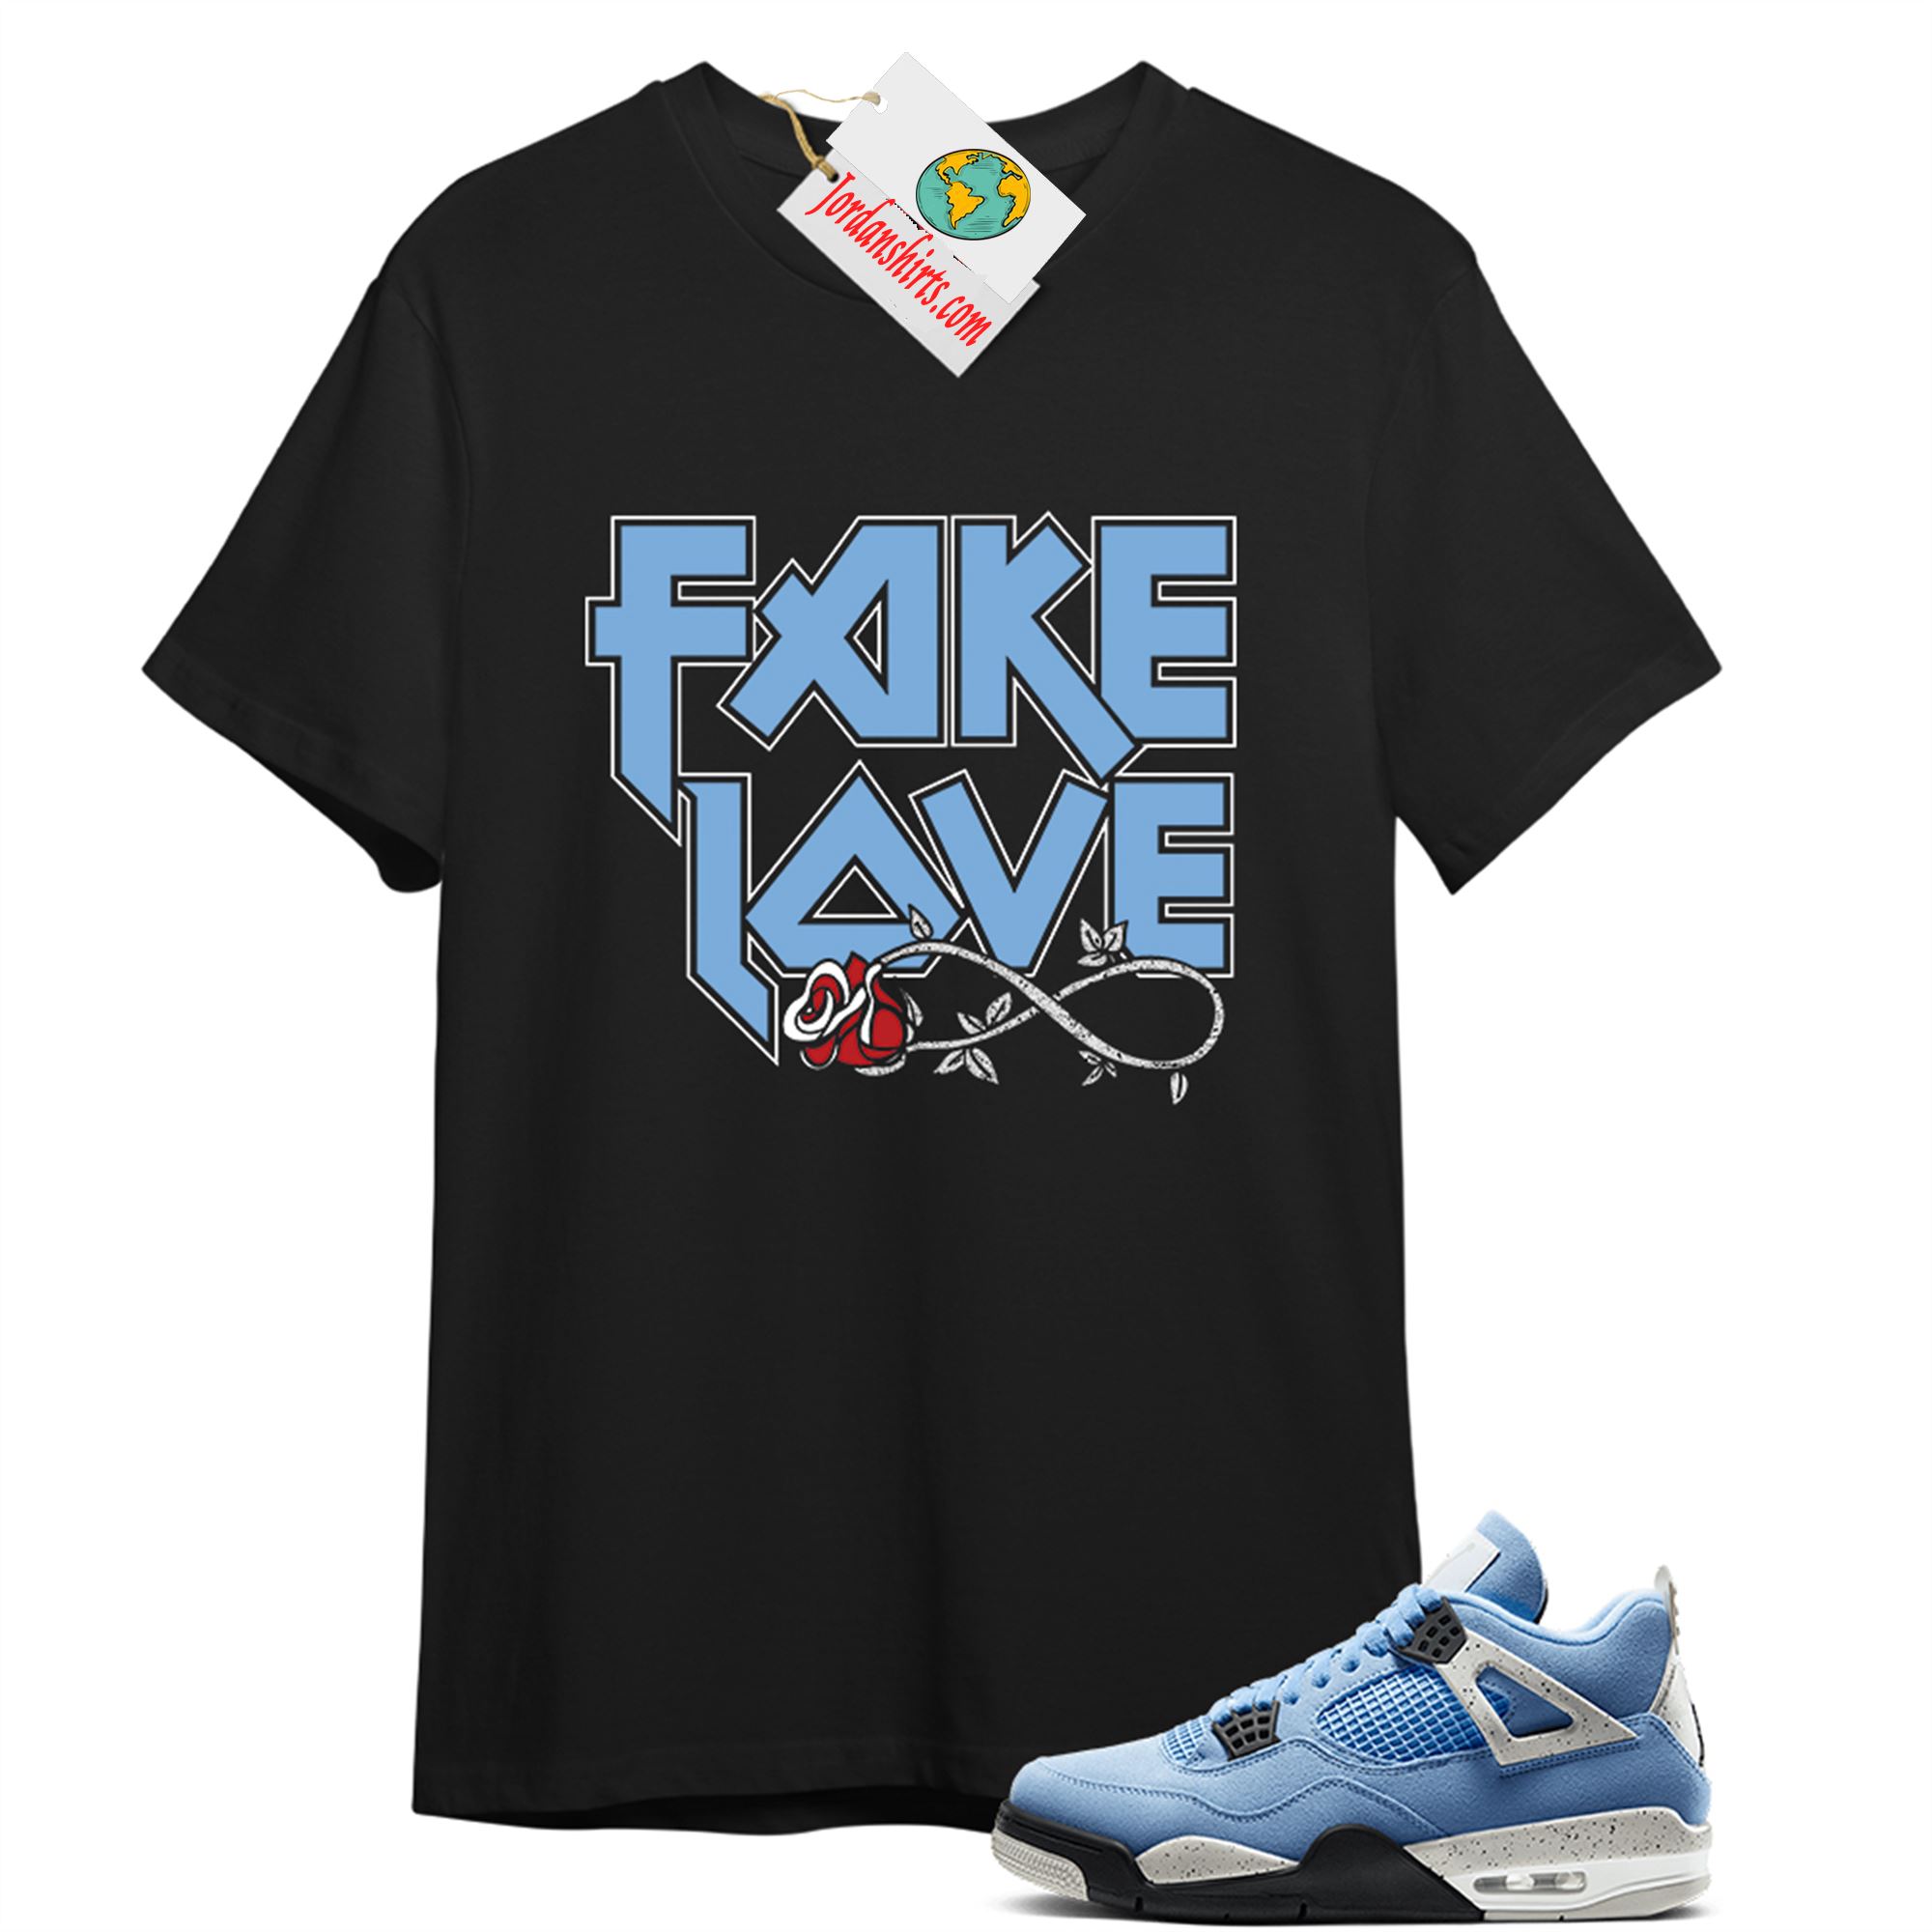 Jordan 4 Shirt, Fake Love Infinity Rose Black T-shirt Air Jordan 4 University Blue 4s Full Size Up To 5xl